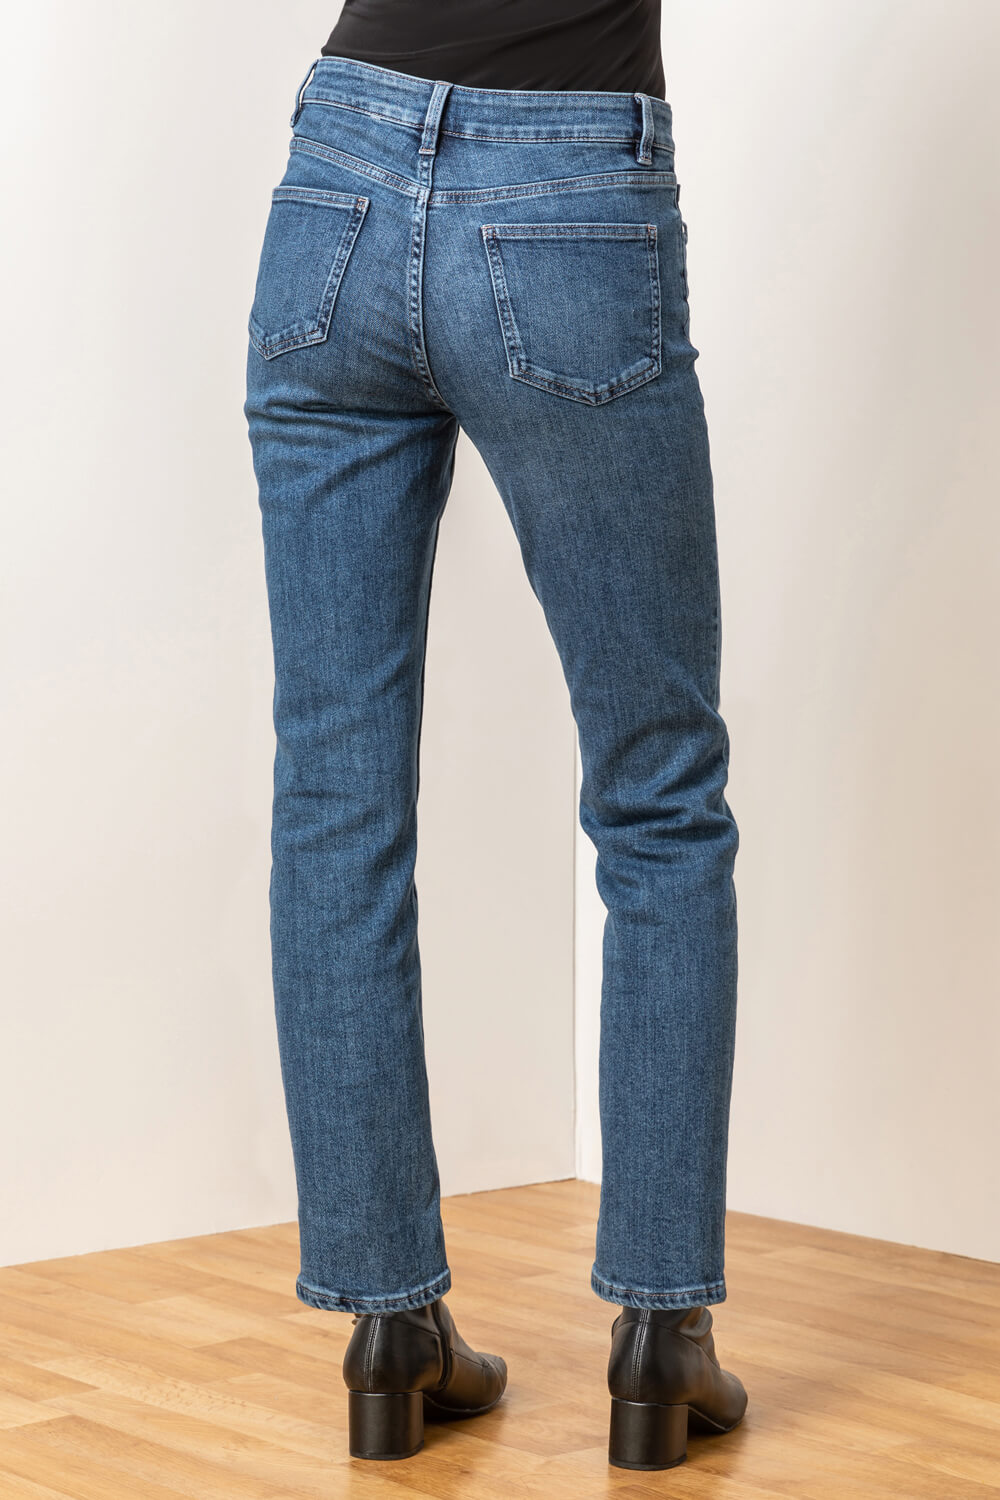 Denim 29" Stretch Slim Leg Jeans, Image 2 of 5